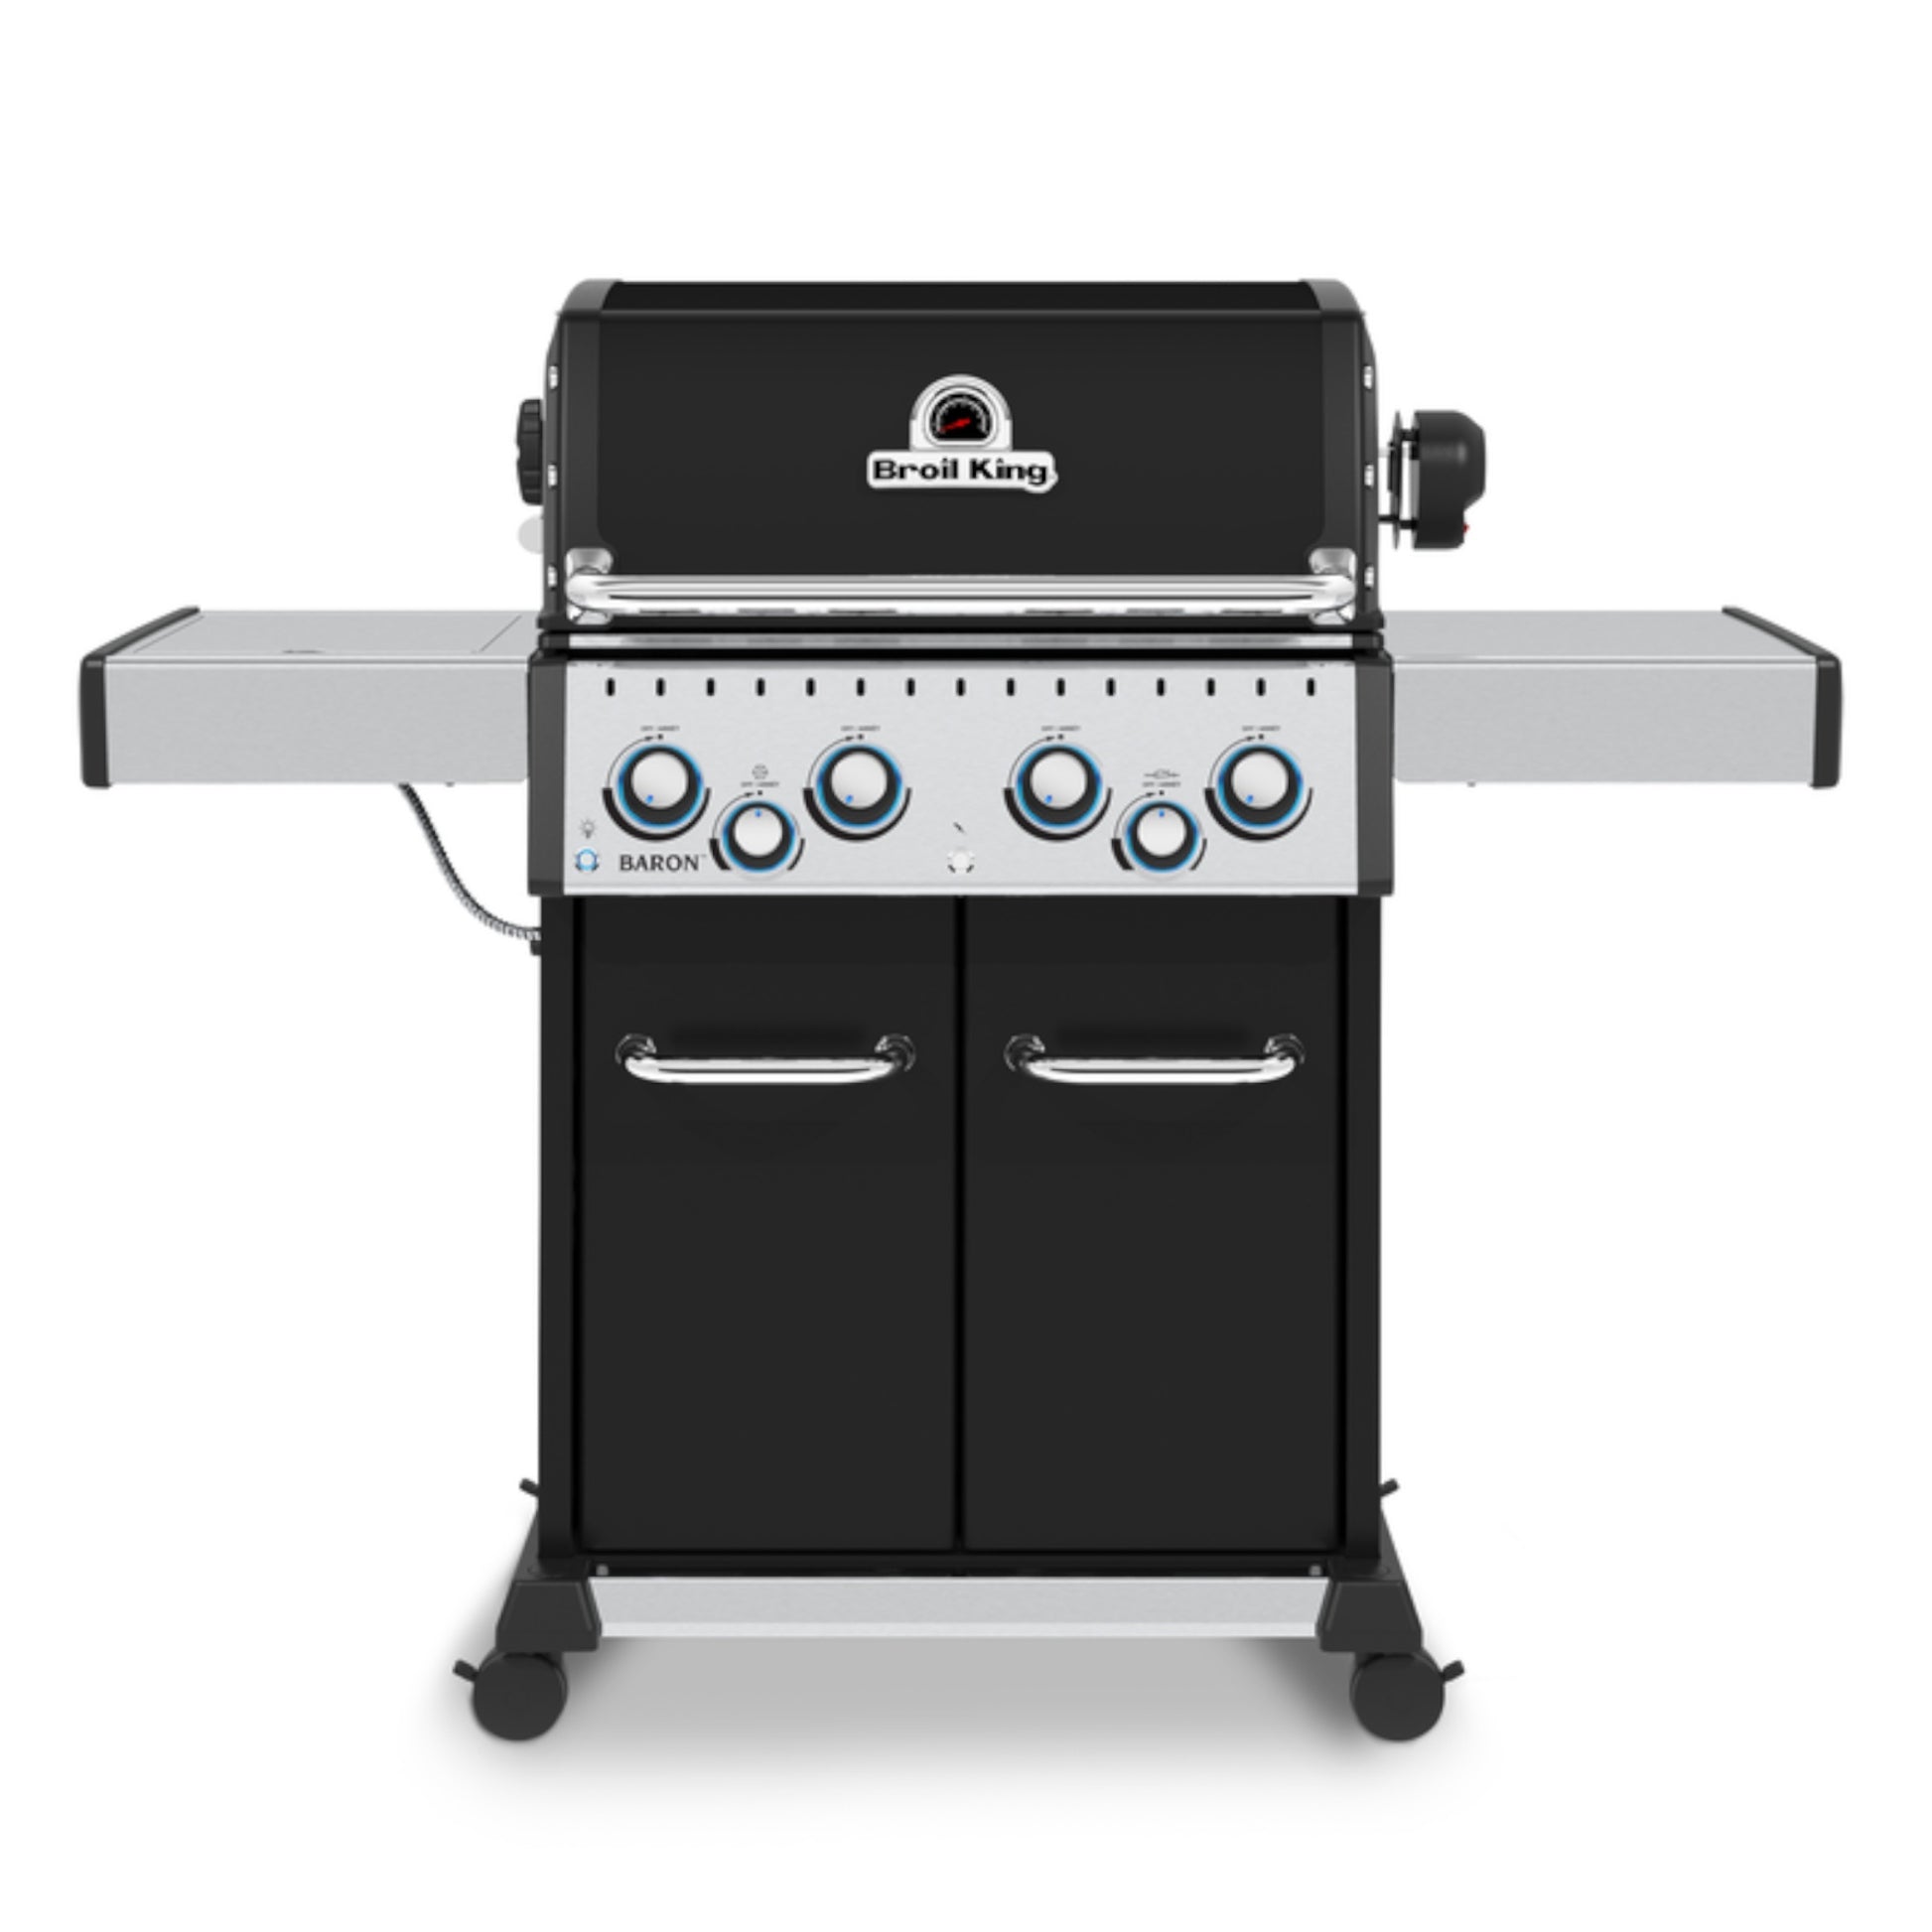 Premium grill in black and silver